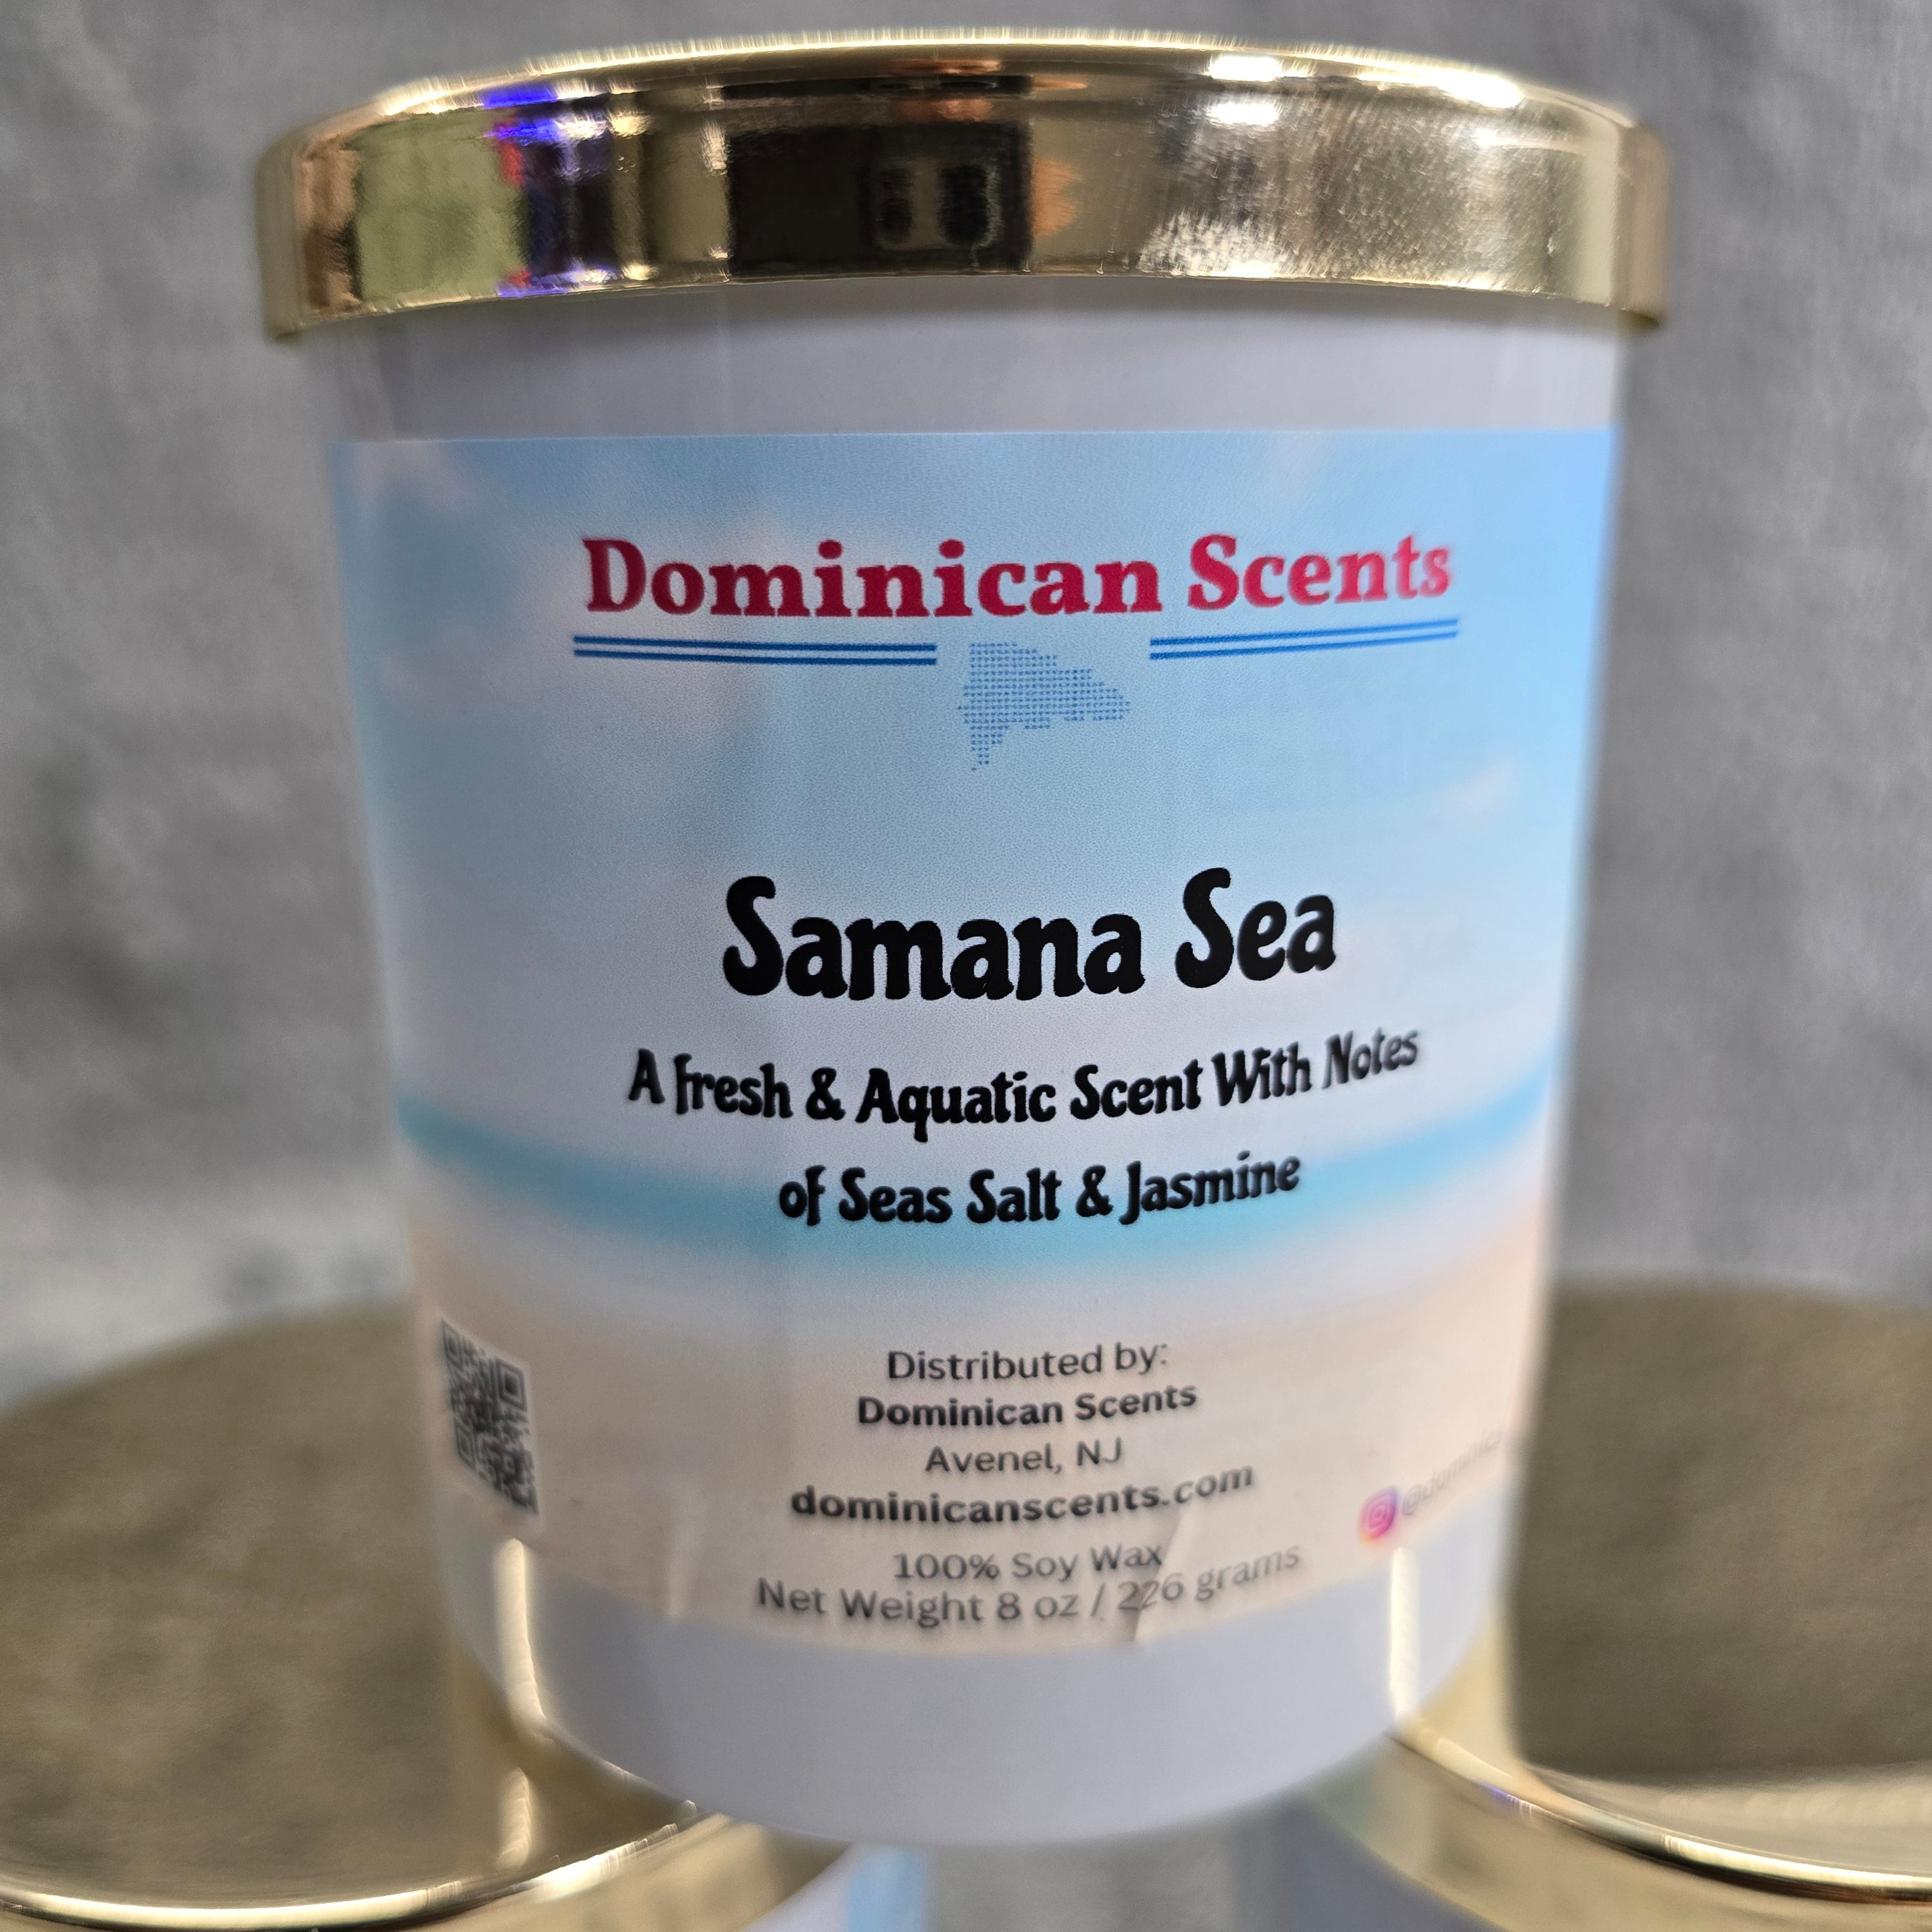 Samana Sea